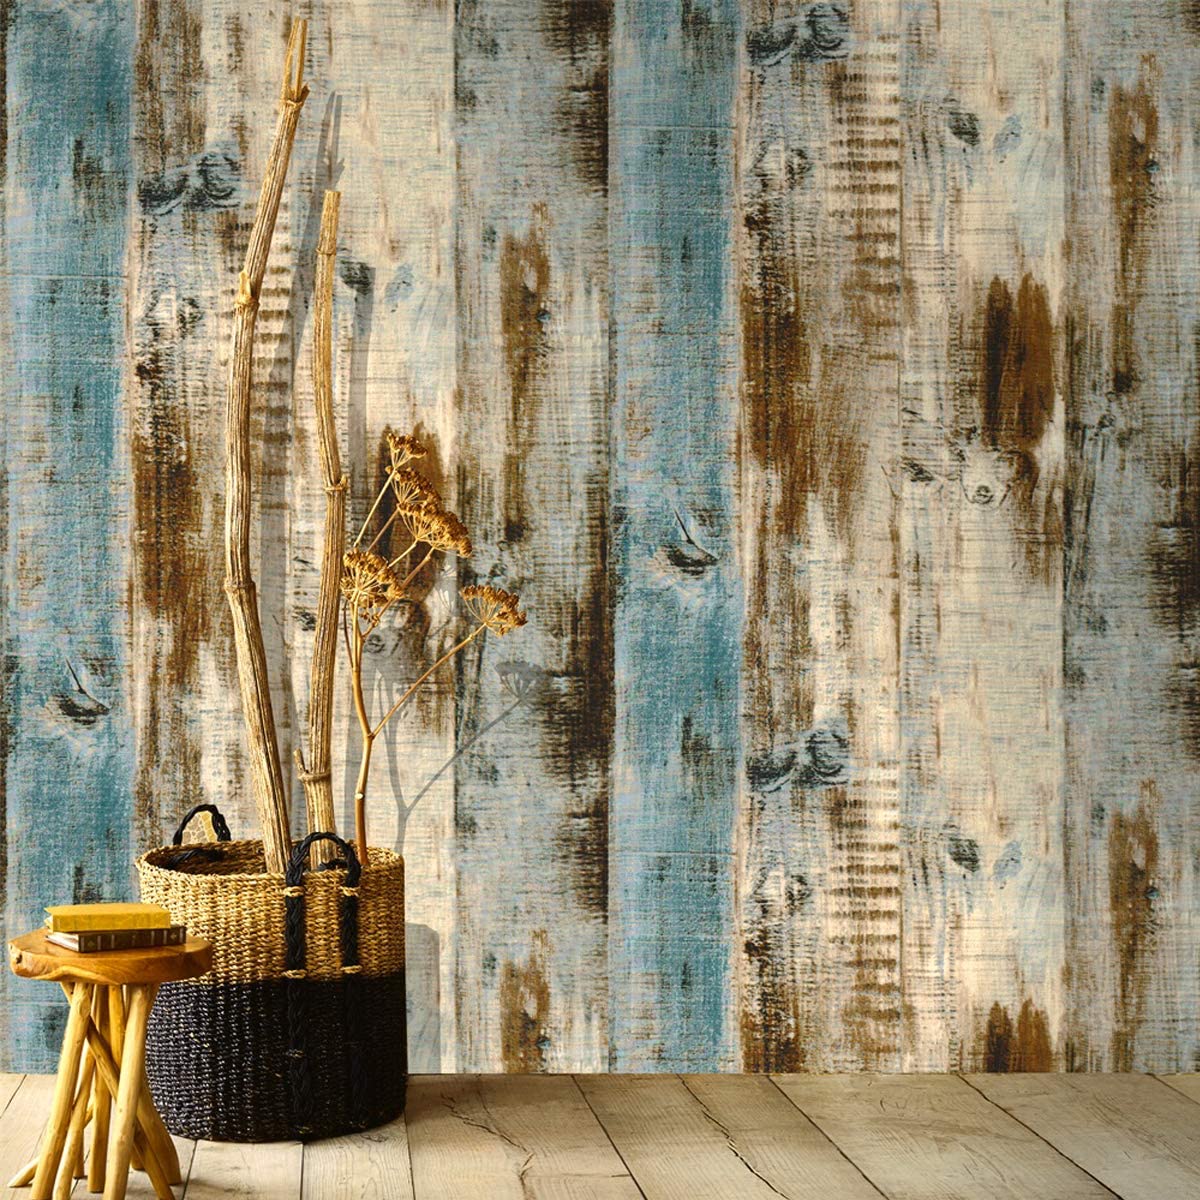 Wooden Logs Wood Grain Backdrop Wall Art Mural Wall Paper Self Adhesive  Vinyl